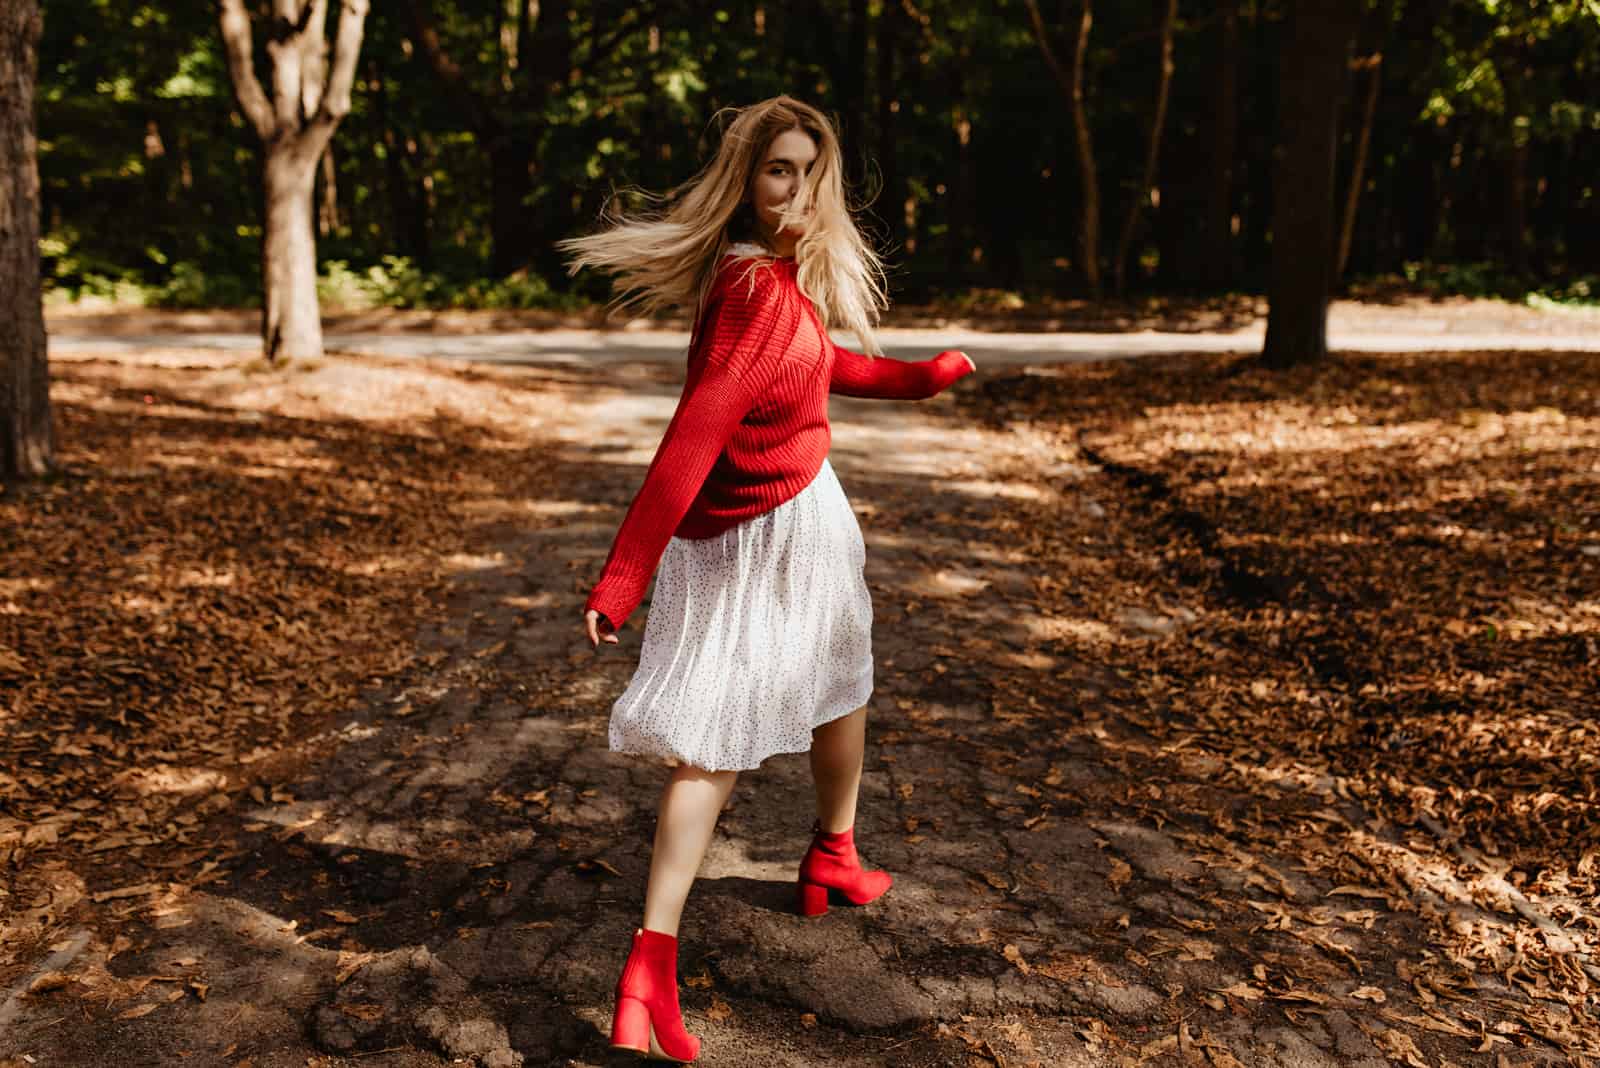 blonde girl in red ad whitewalking in park